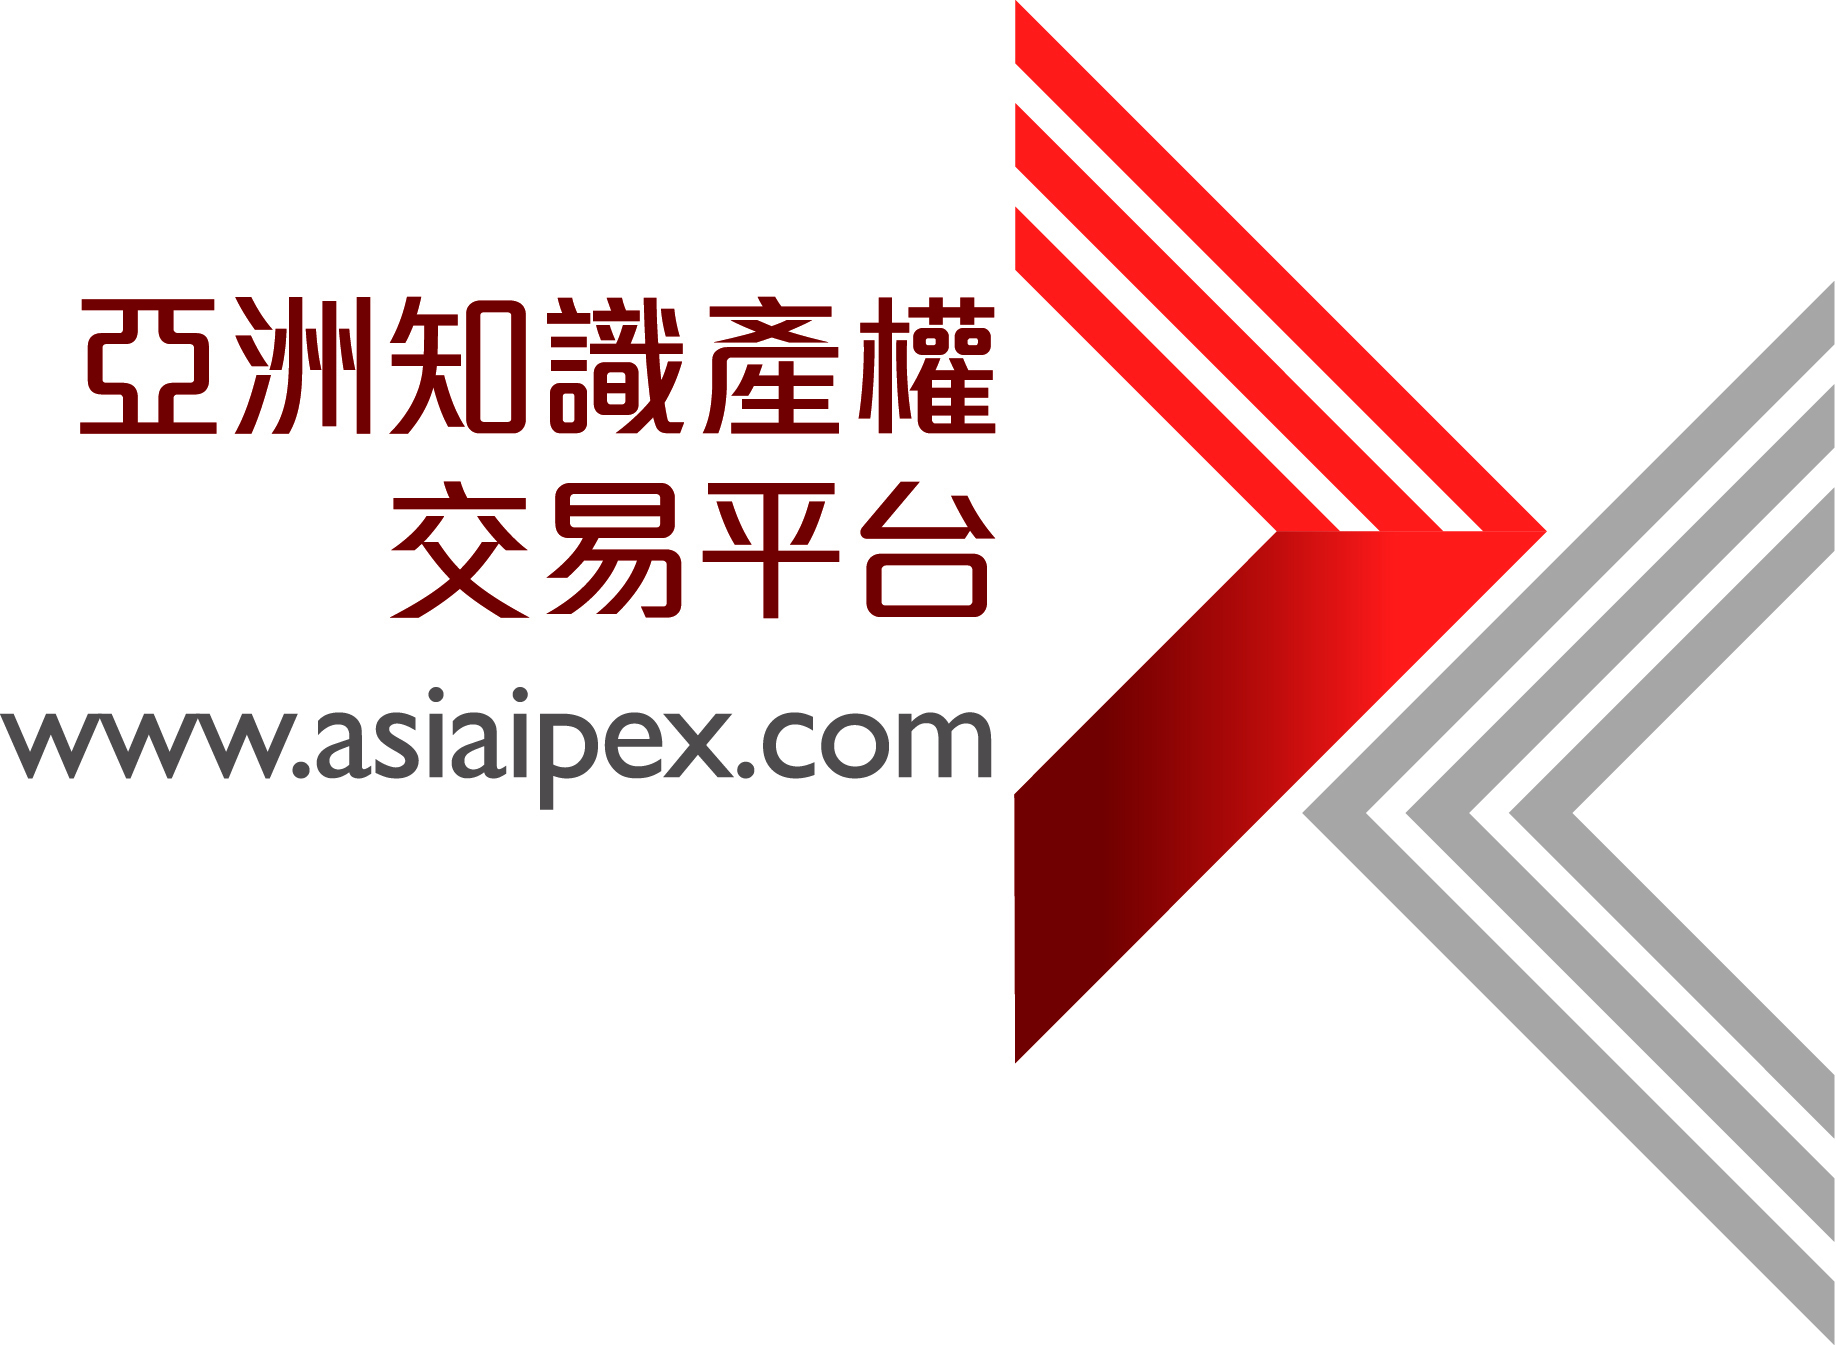 Asia IP Exchange